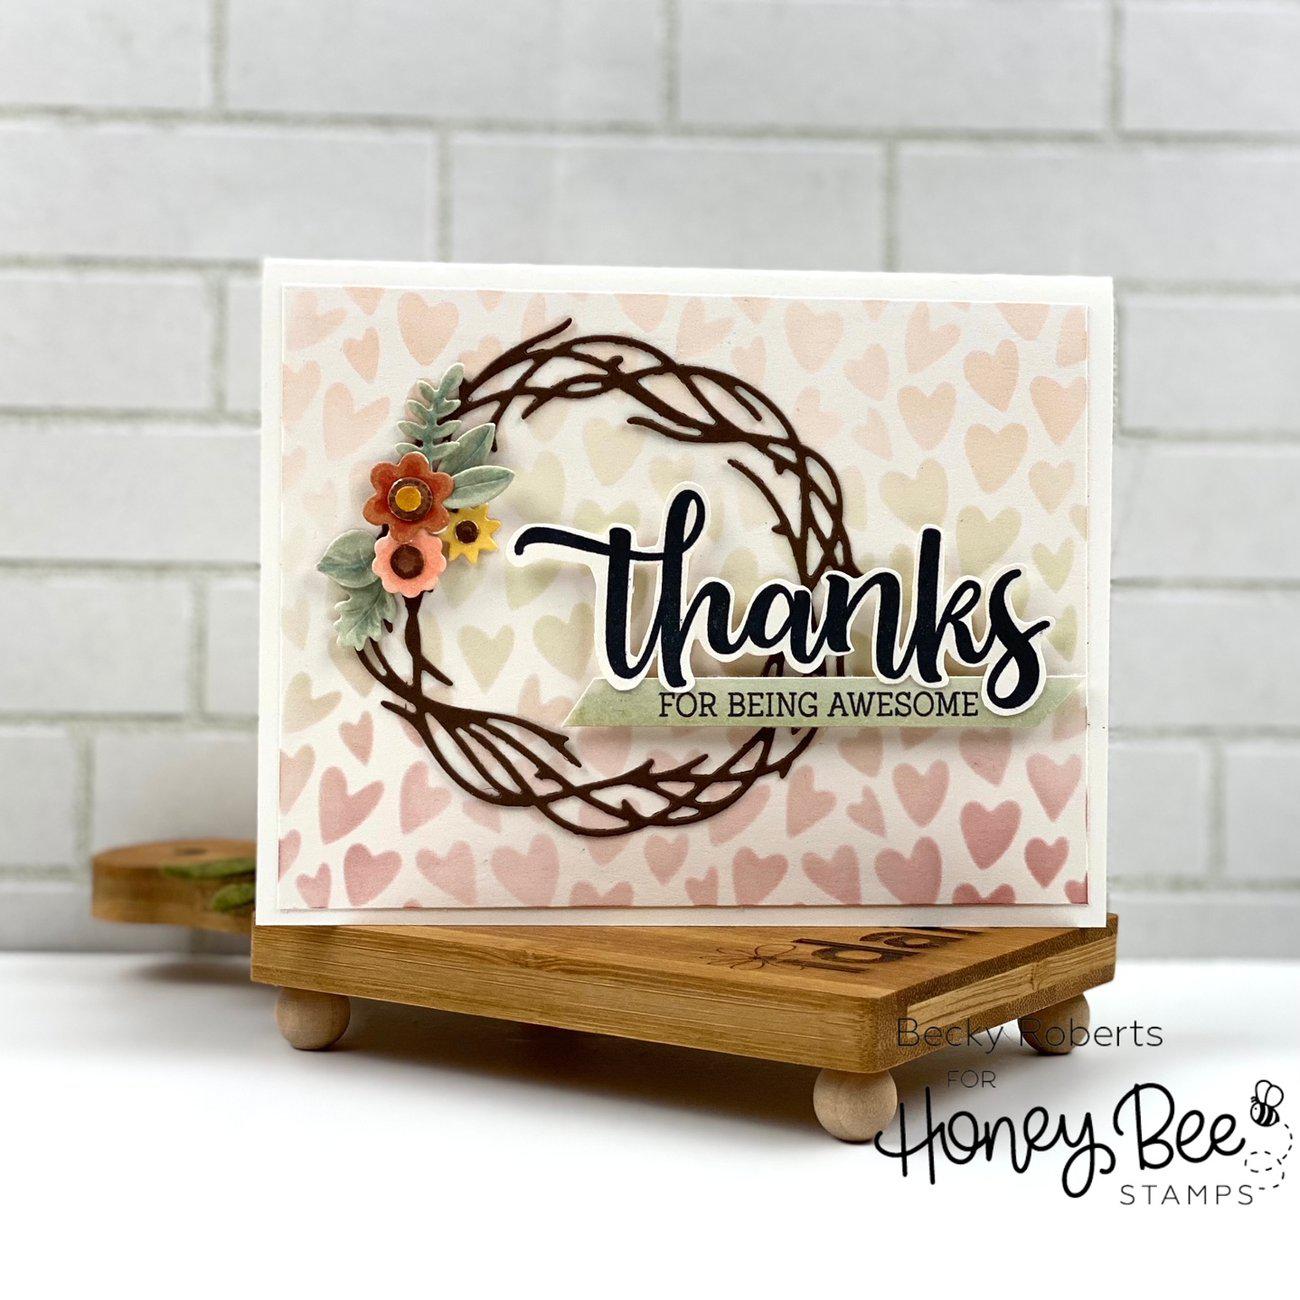 Honey Bee Stamps - Honey Cuts - Grapevine Wreath-ScrapbookPal